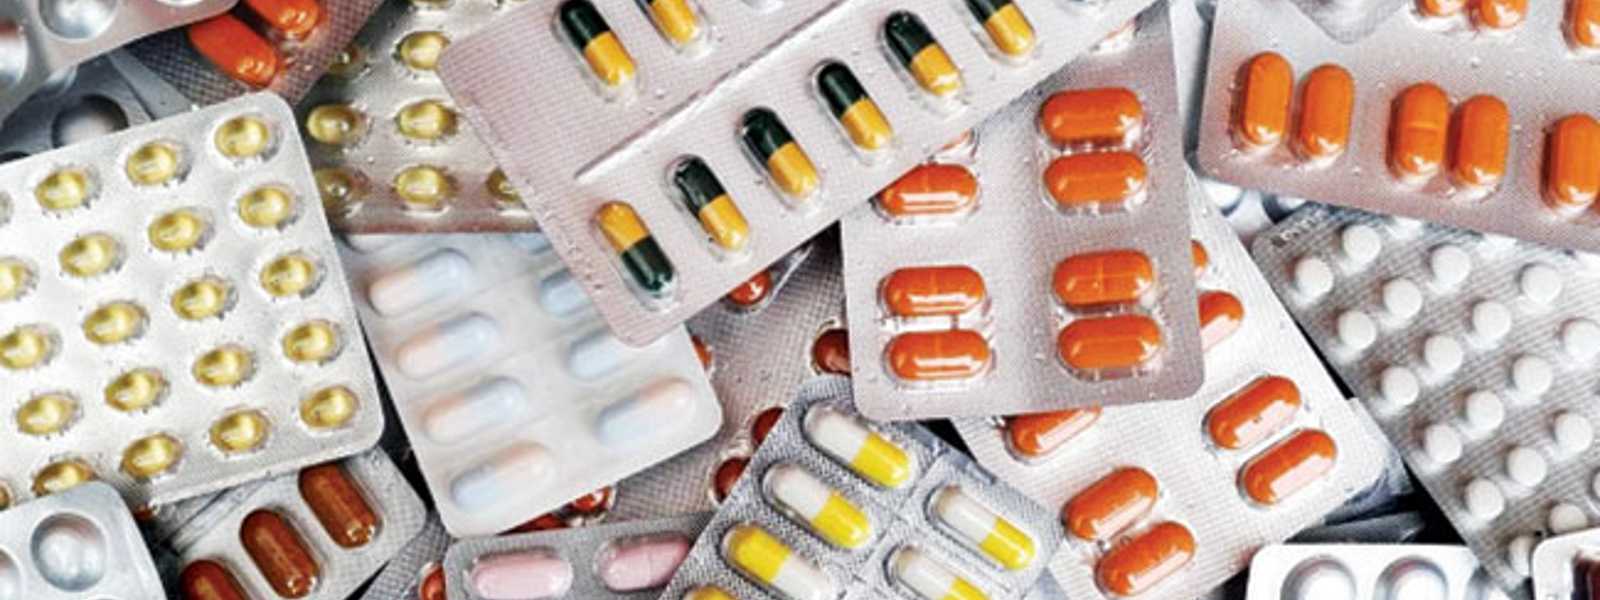 Hospitals fall victim to severe shortage of medicines